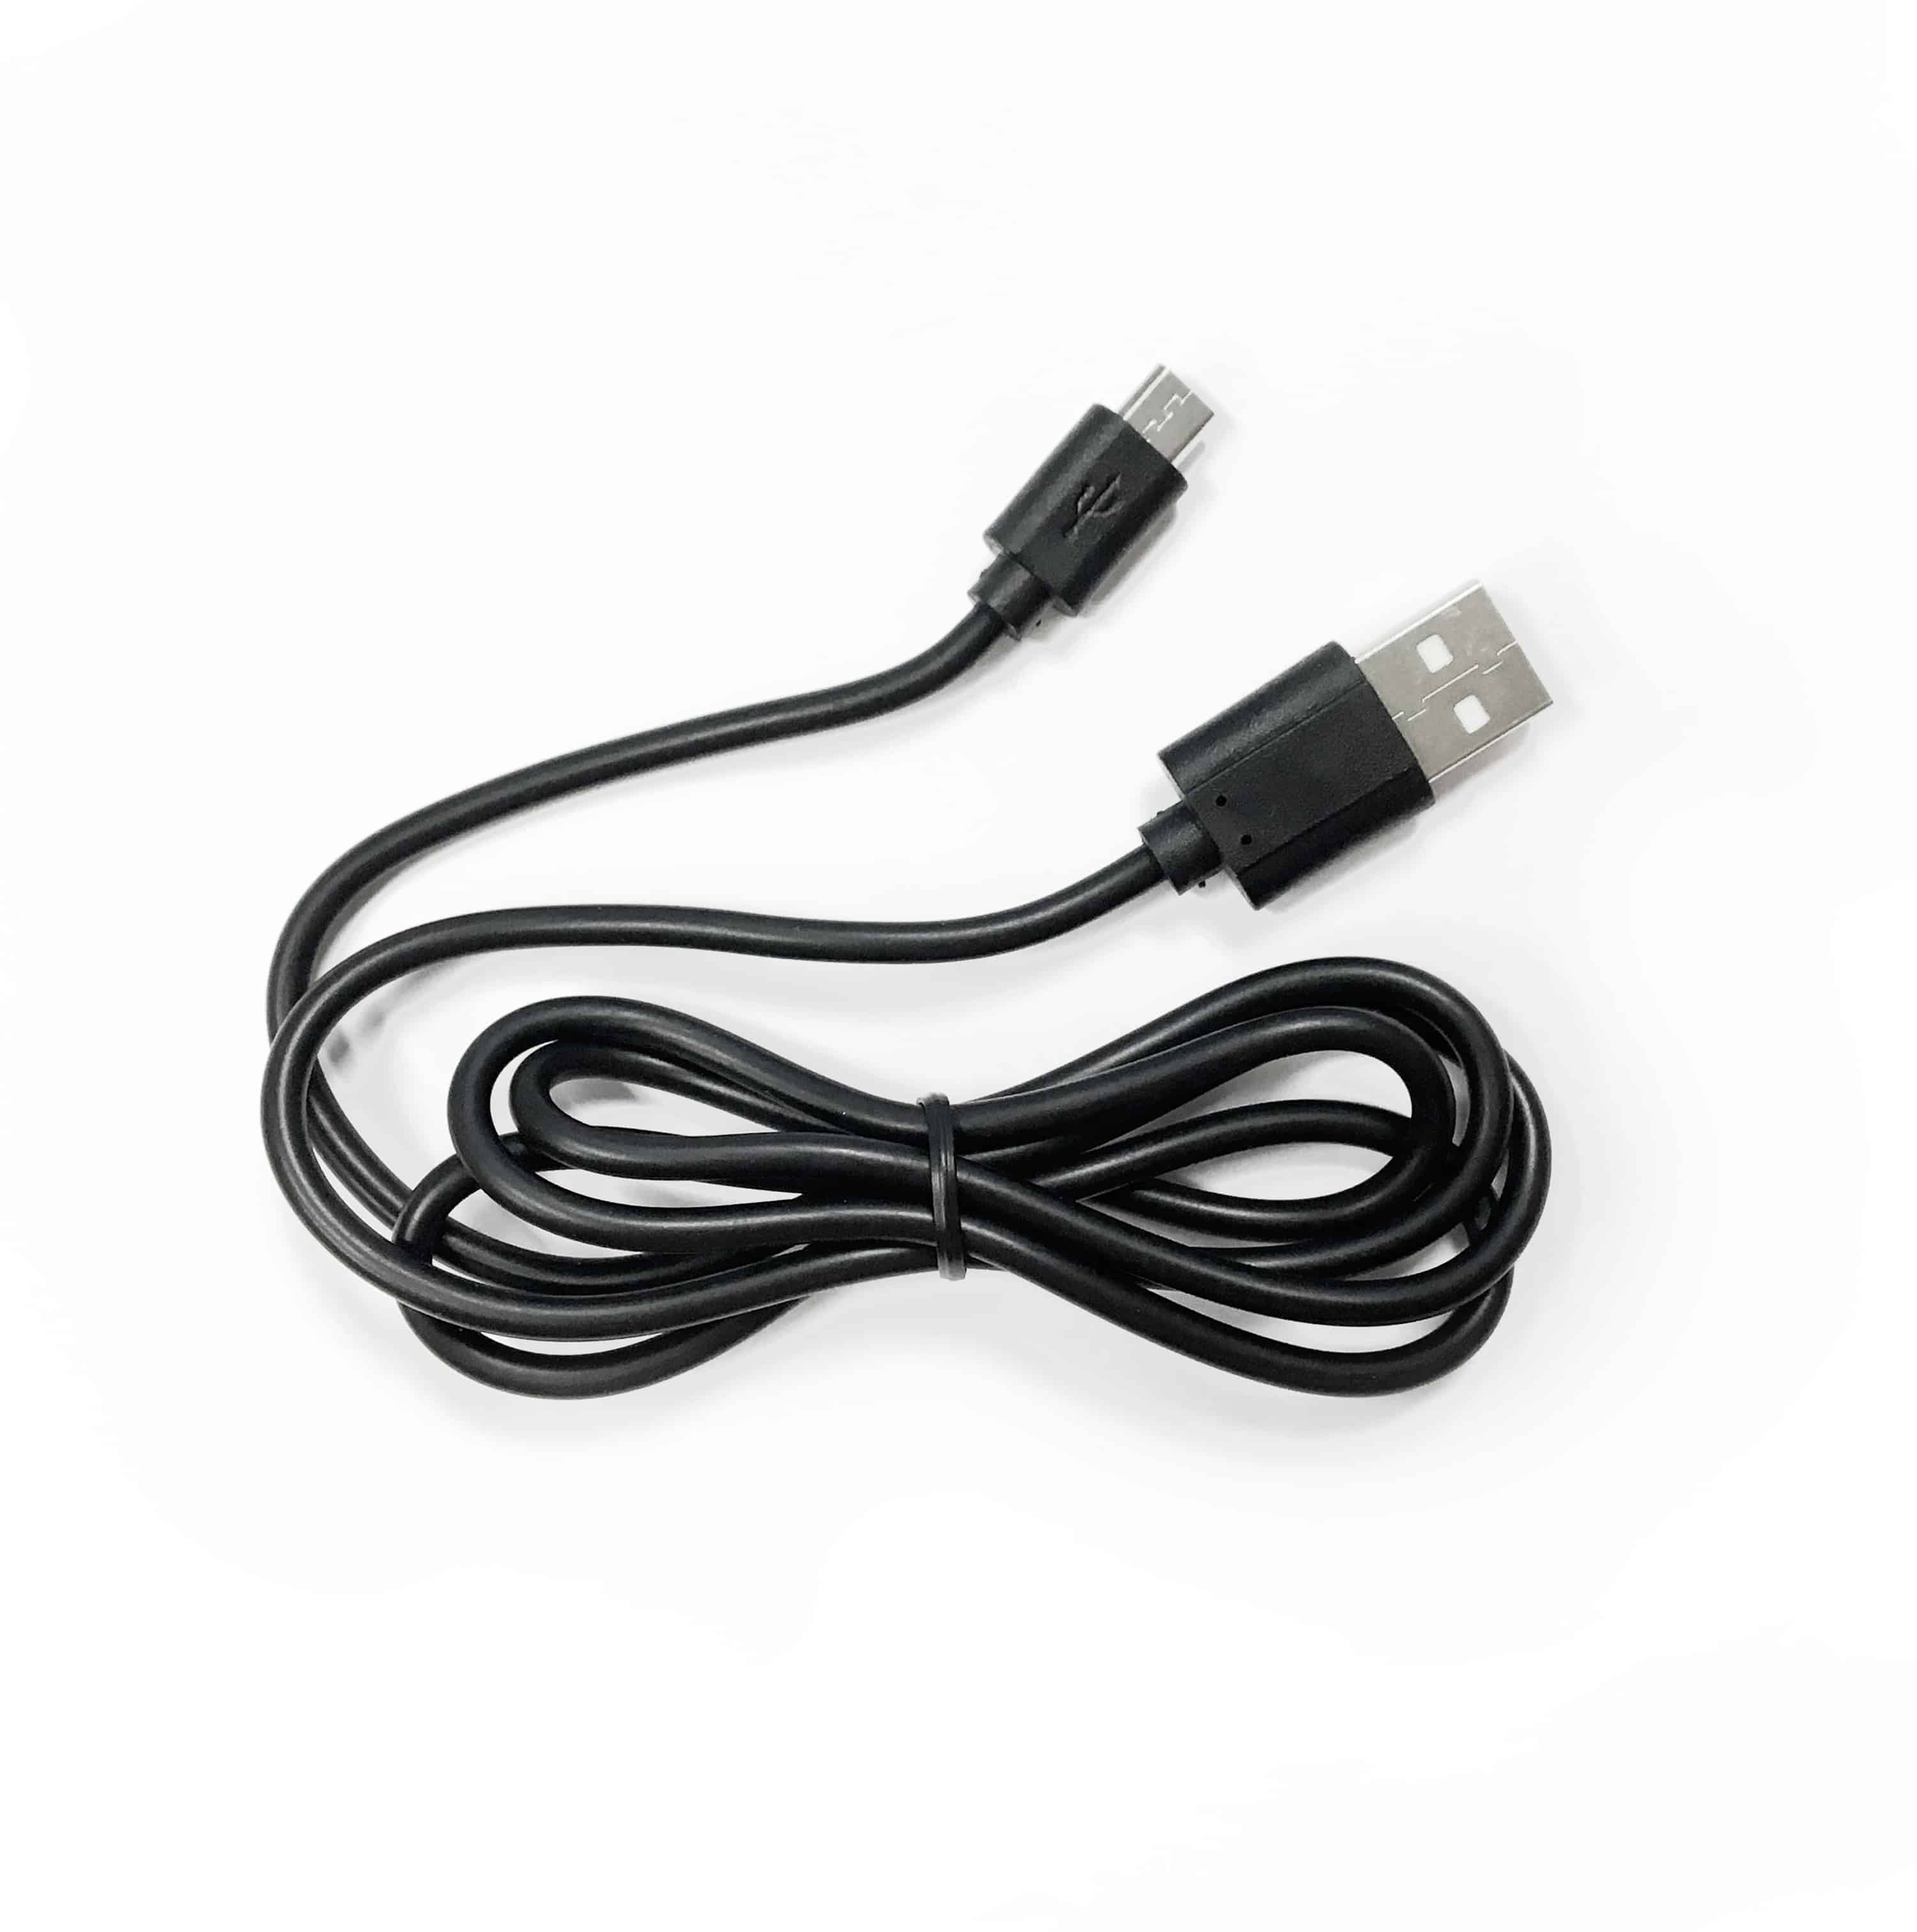 Cargador Celular Rapido Soul One Charge 2.4 +cable Micro Usb